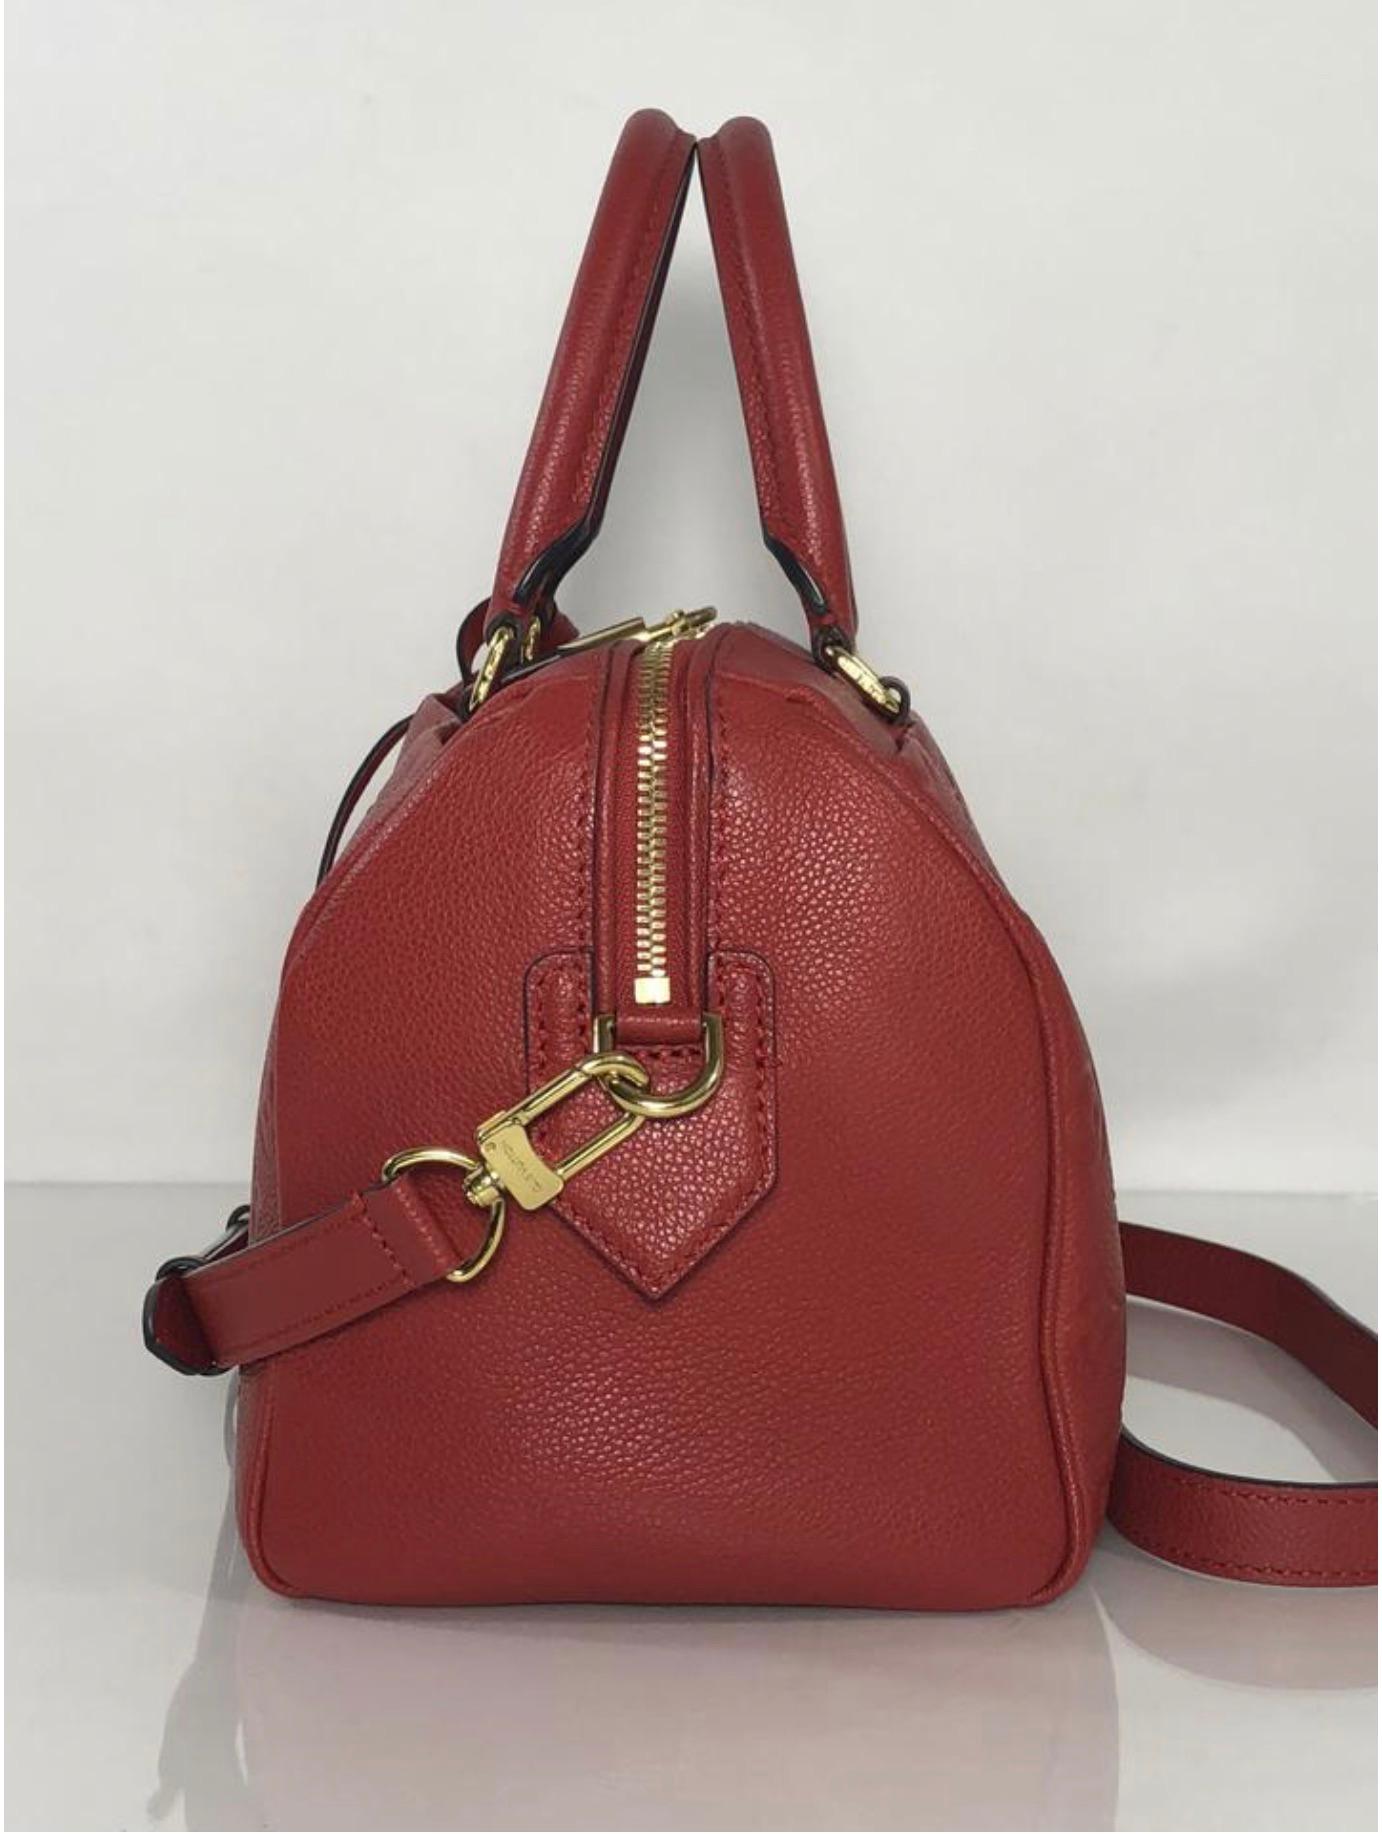 Women's or Men's Louis Vuitton Empreinte Speedy 25 in Red Satchel Handbag For Sale